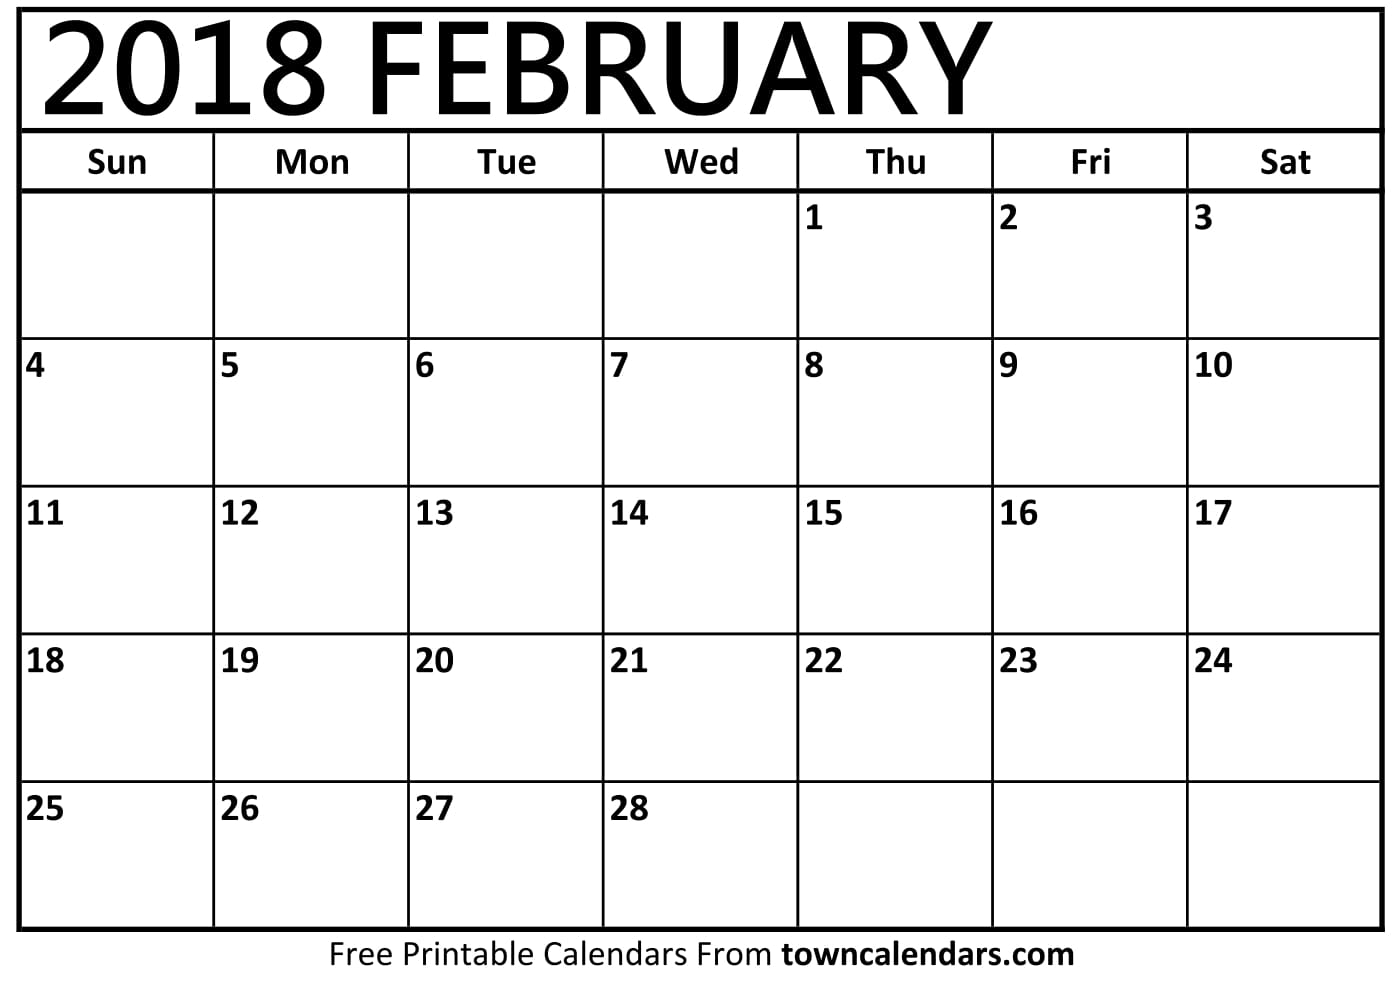 printable-february-2018-calendar-towncalendars